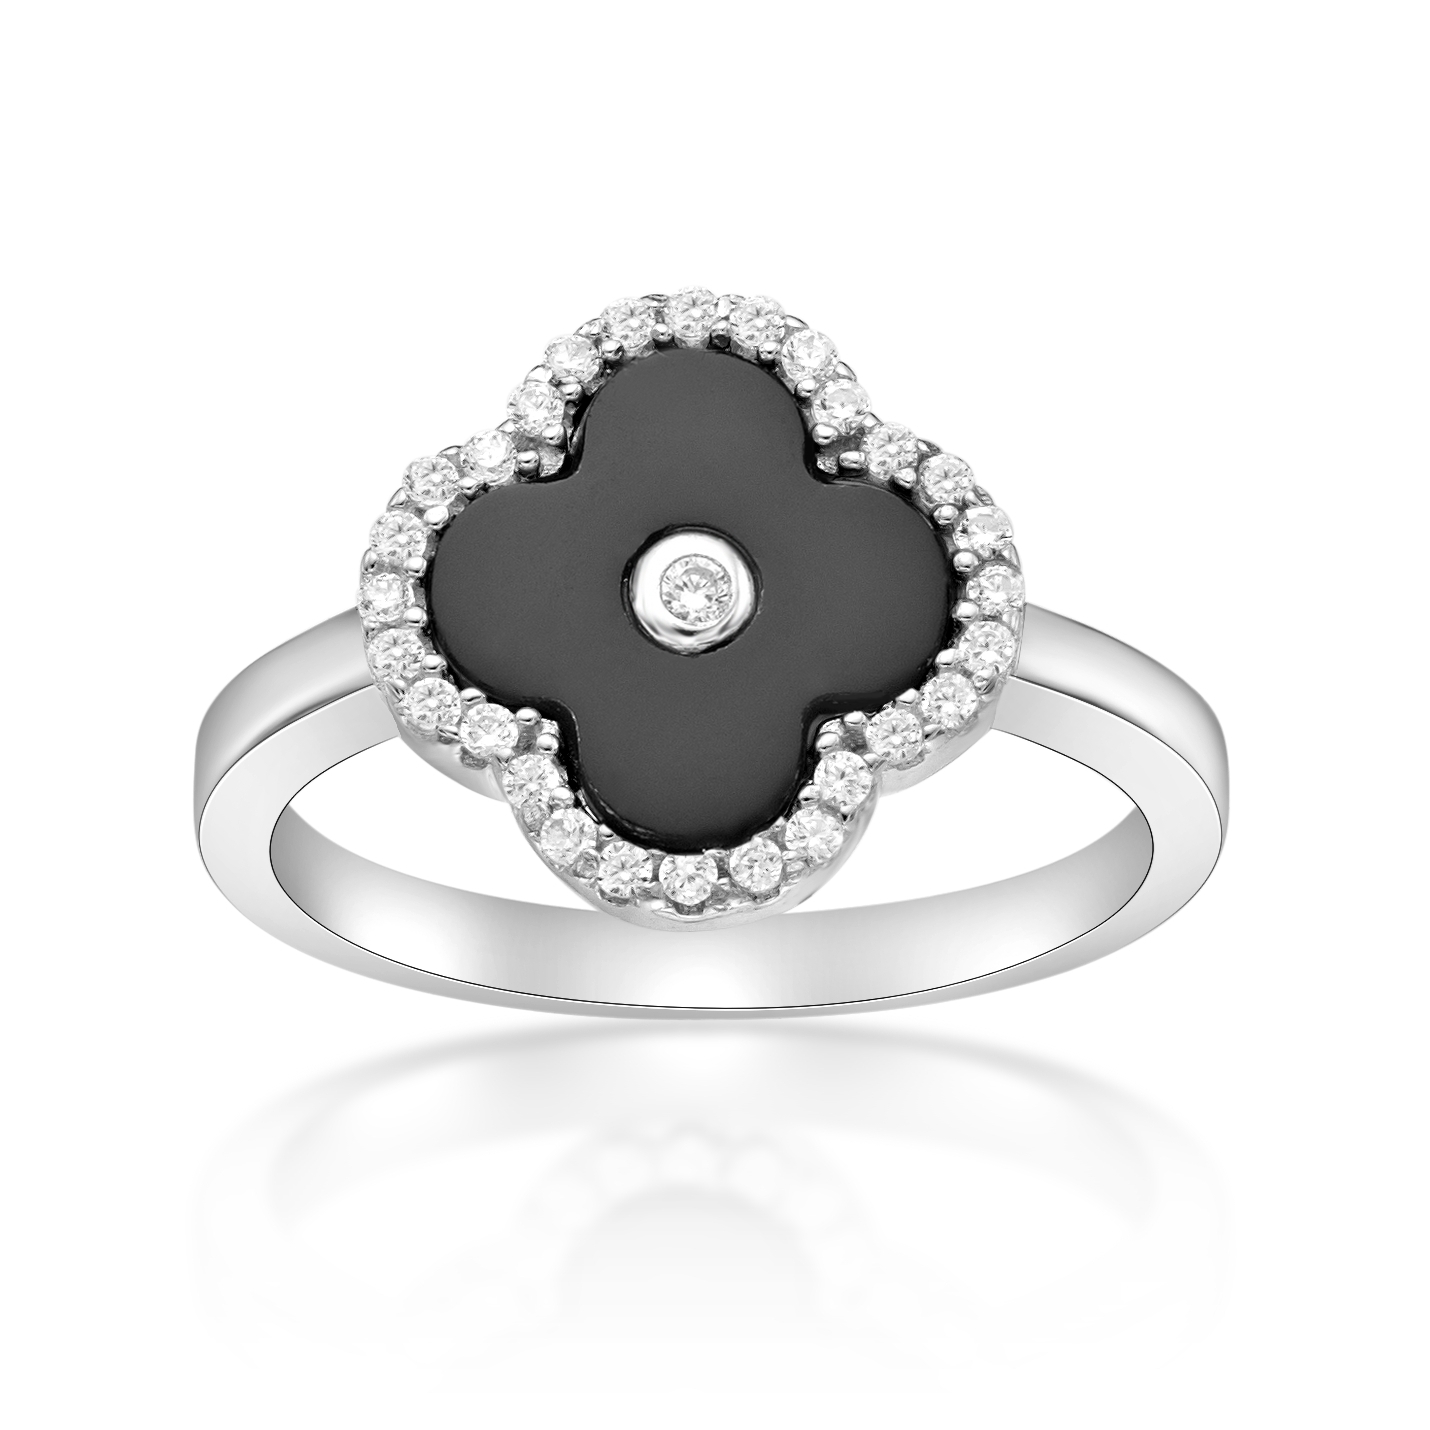 Lavari Jewelers Women’s Black Onyx Flower Ring, 925 Sterling Silver, Cubic Zirconia, Size 7